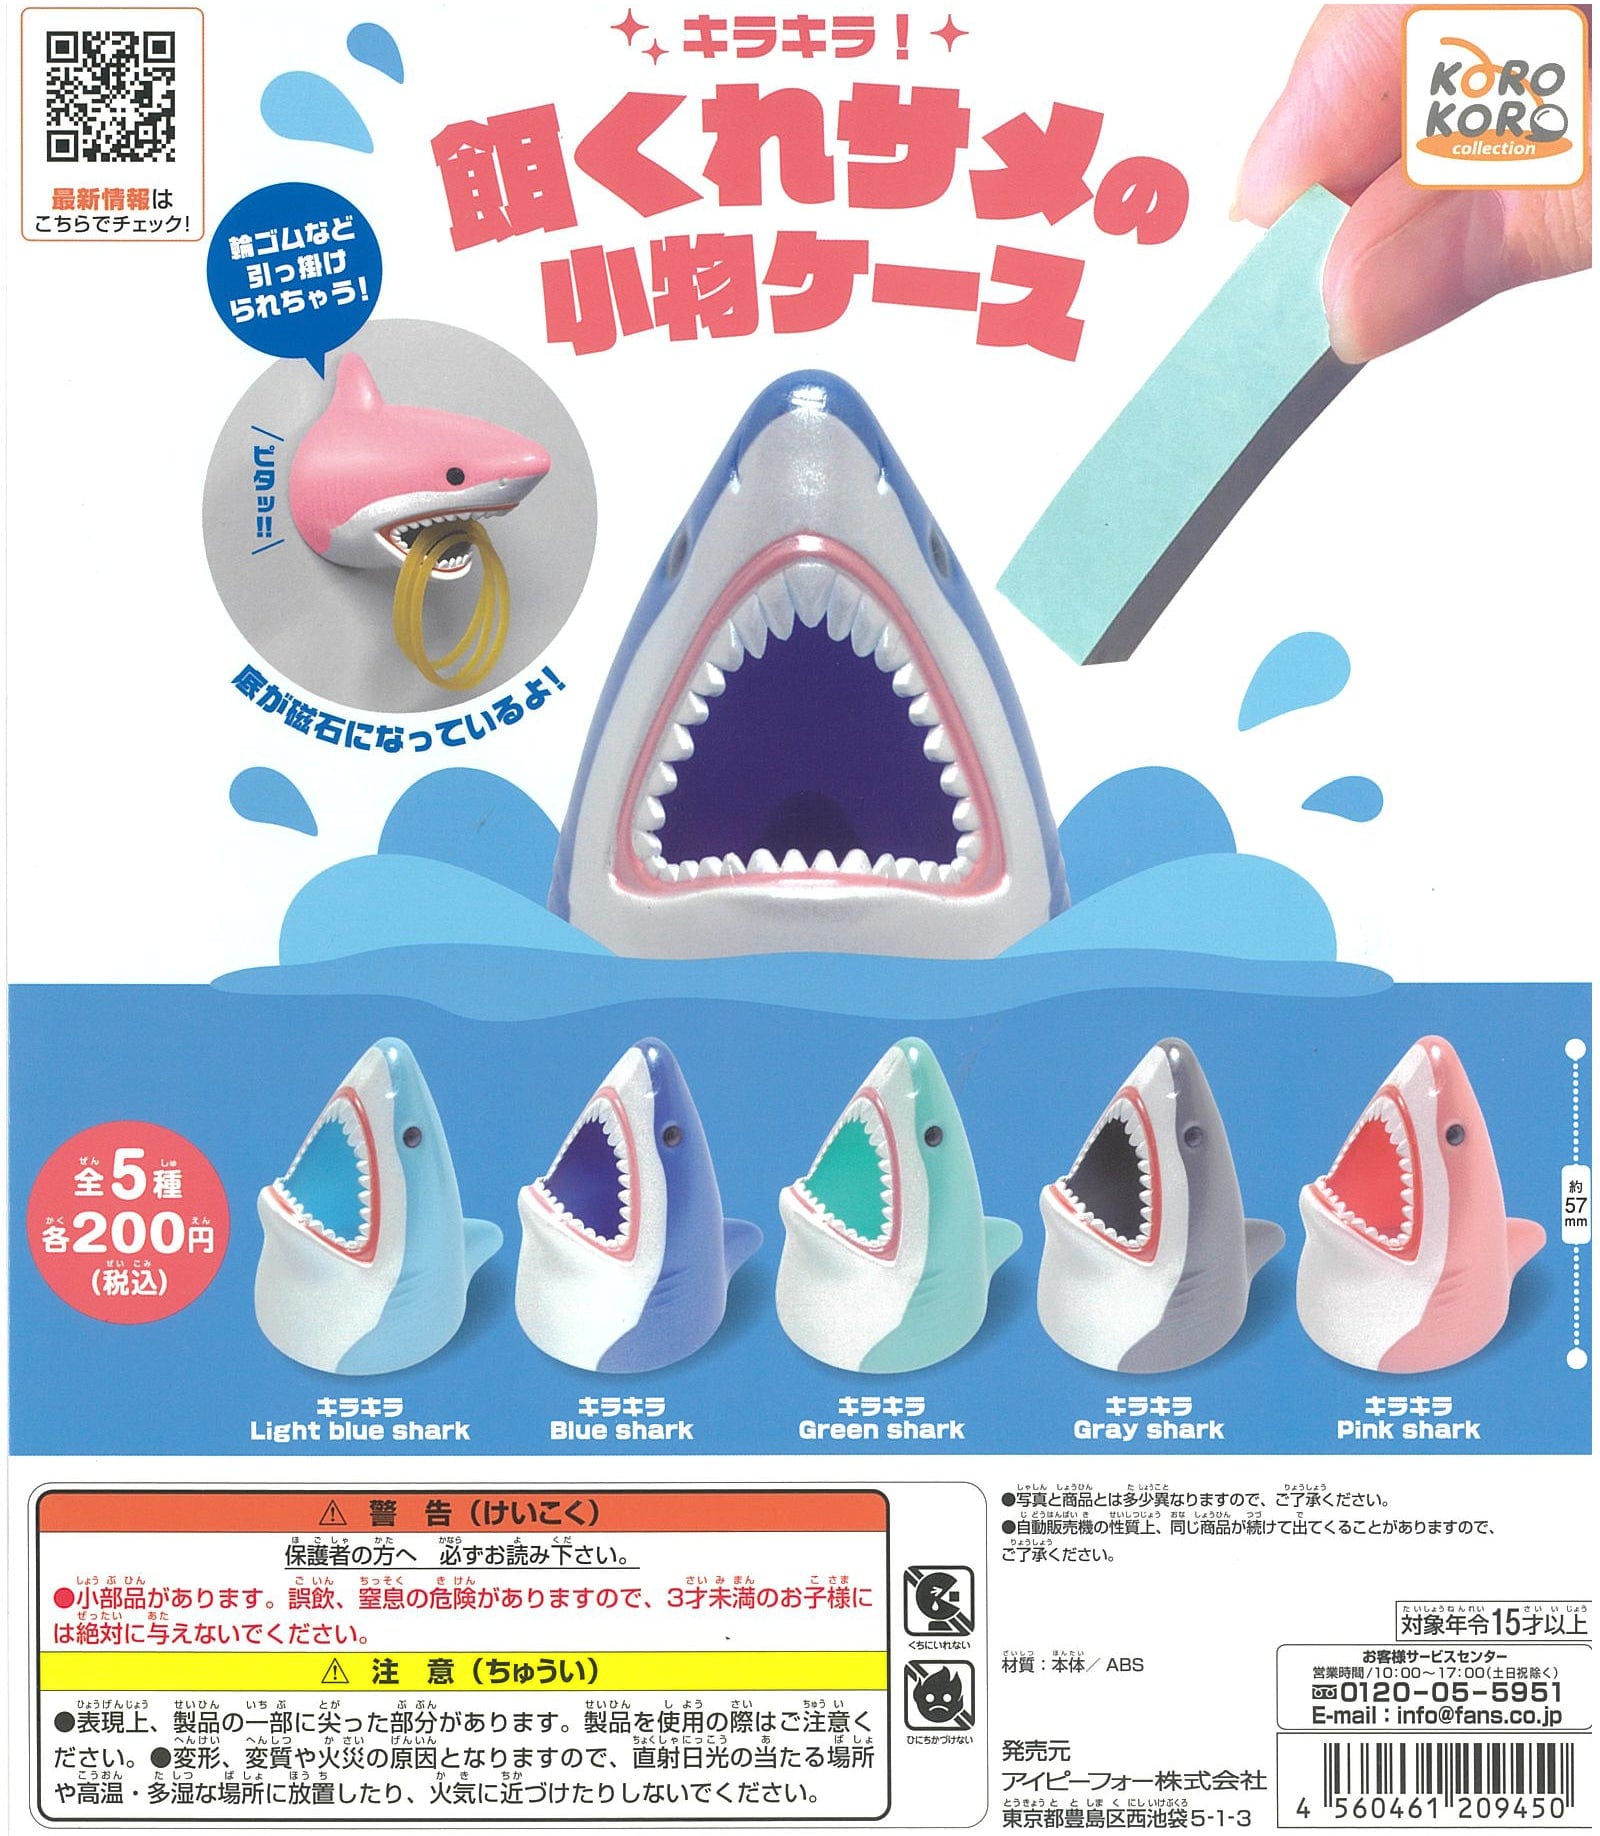 KoroKoro Collection CP1228 Kirakira! Esa Kure Shark Accessory Case